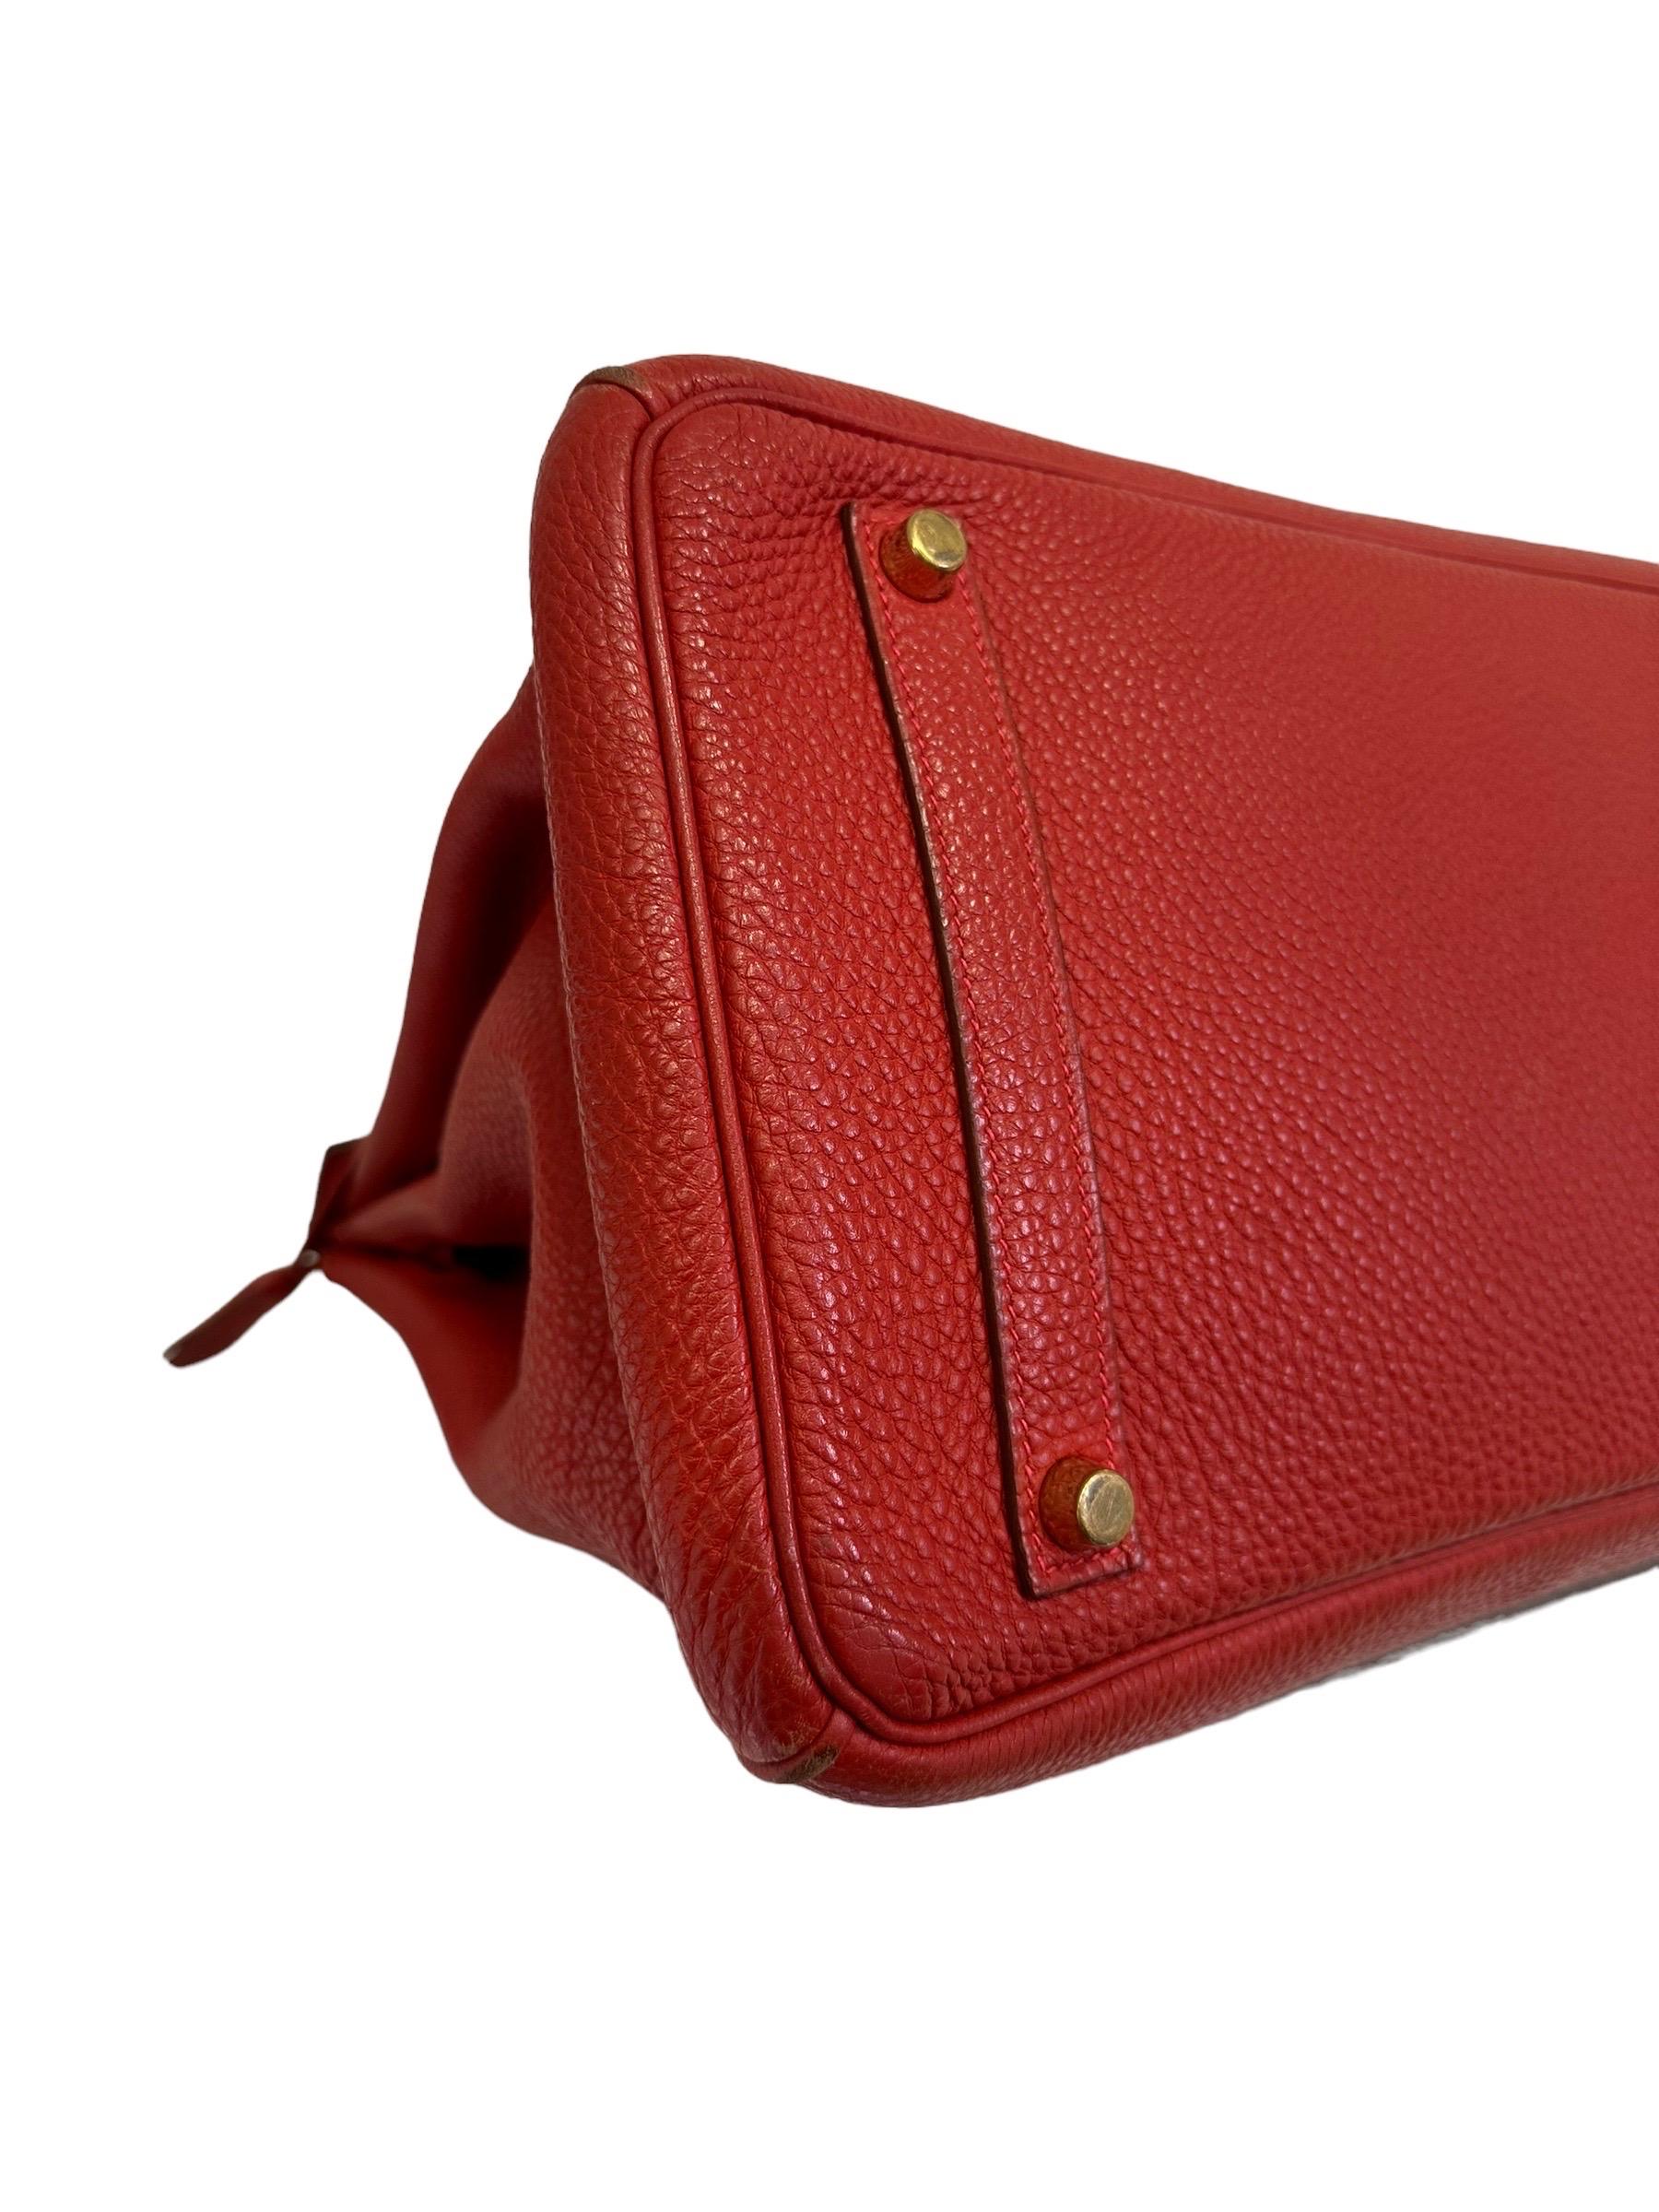 2004 Hermès Birkin 35 Fjord Leather Rouge Geranium Top Handle Bag  For Sale 6